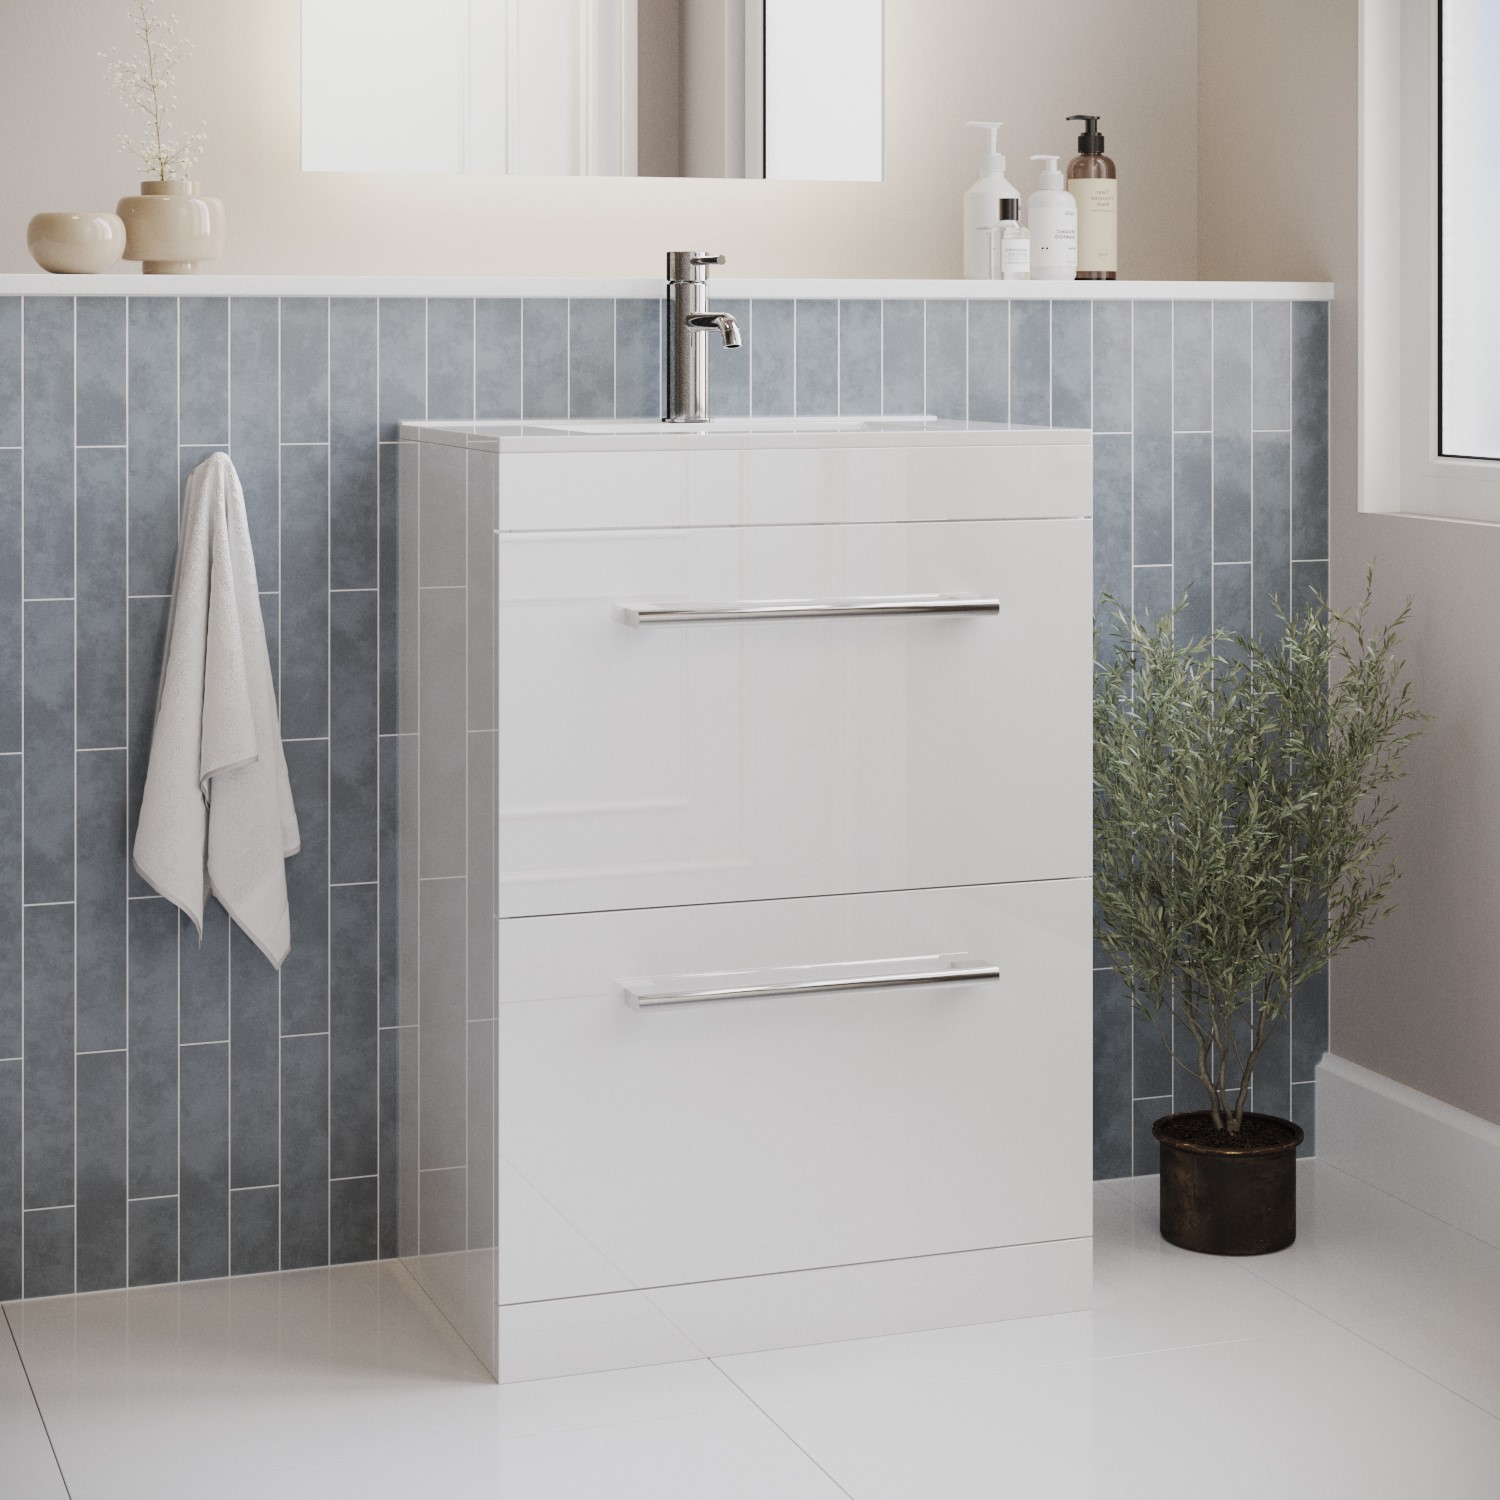 Artis 600mm Bathroom Floor Standing Vanity Unit Countertop Rectangular Basin White 